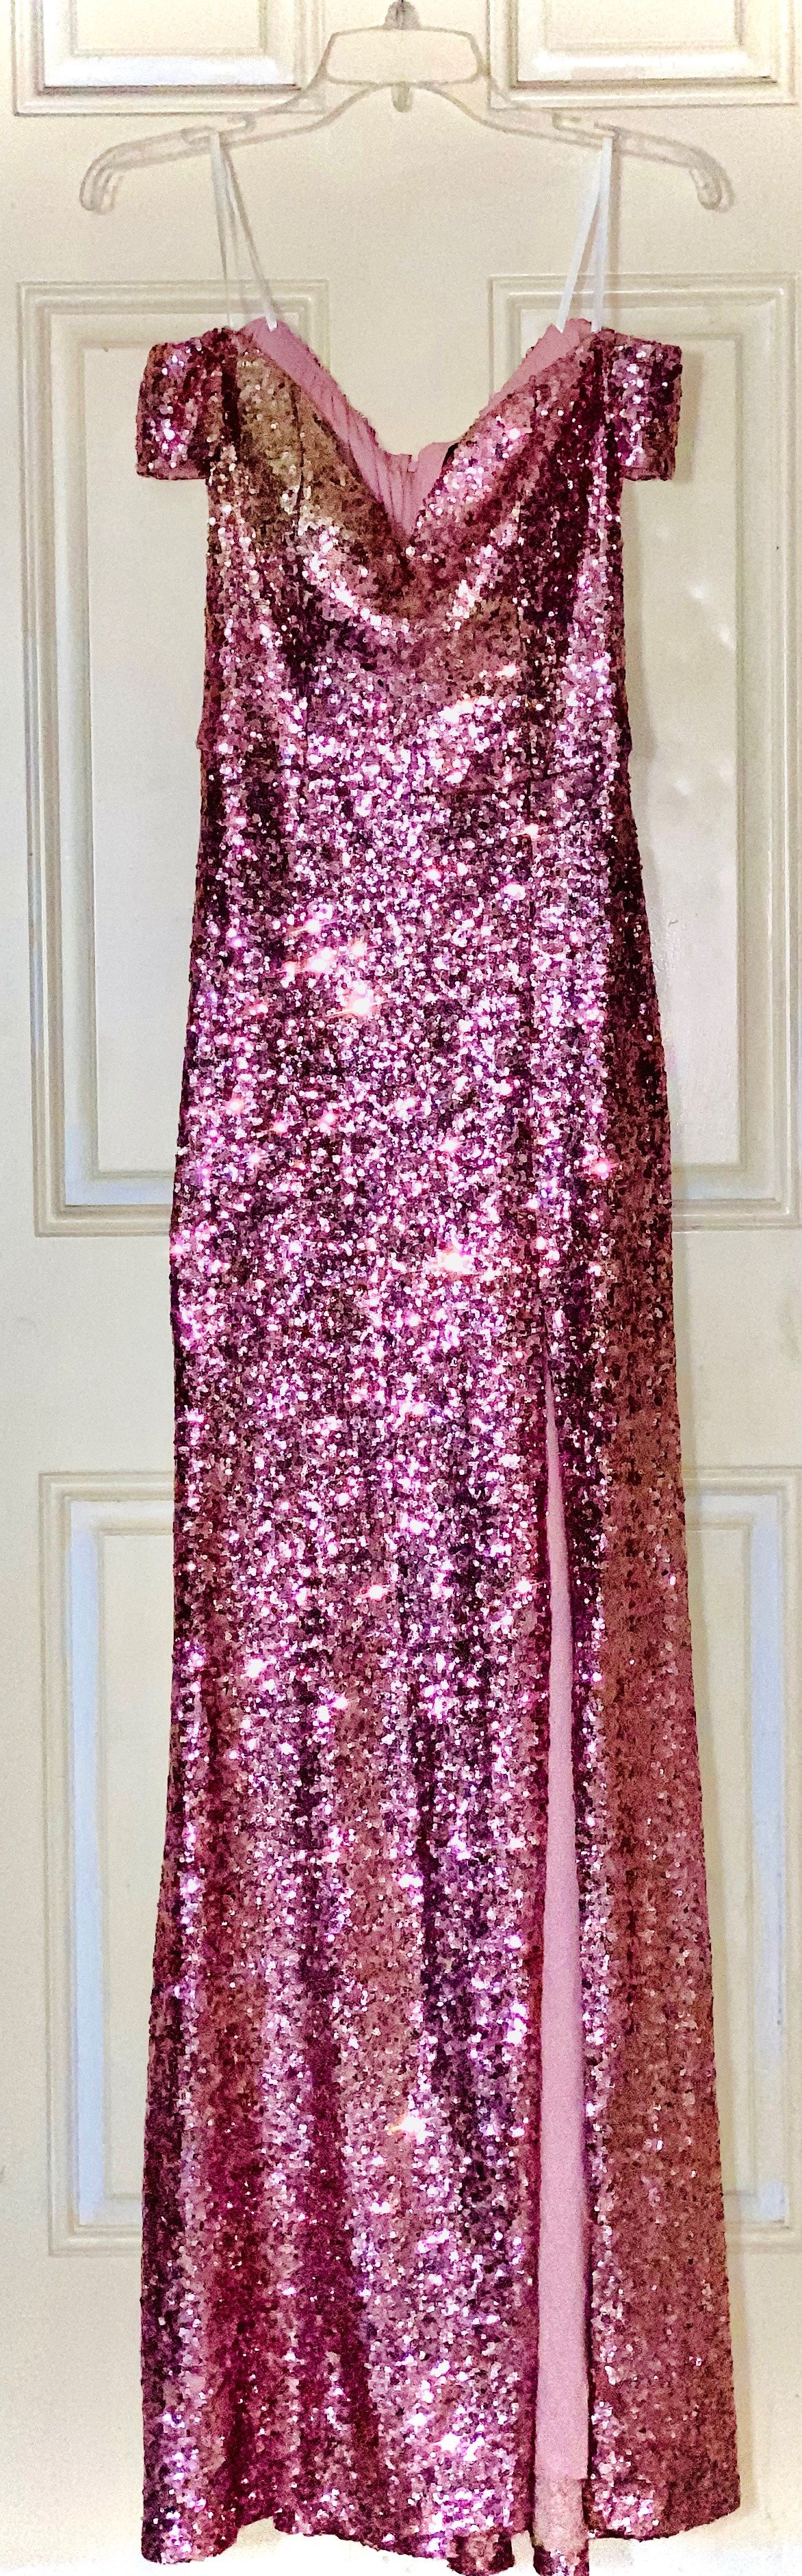 B. Darlin Size 12 Prom Off The Shoulder Pink Side Slit Dress on Queenly